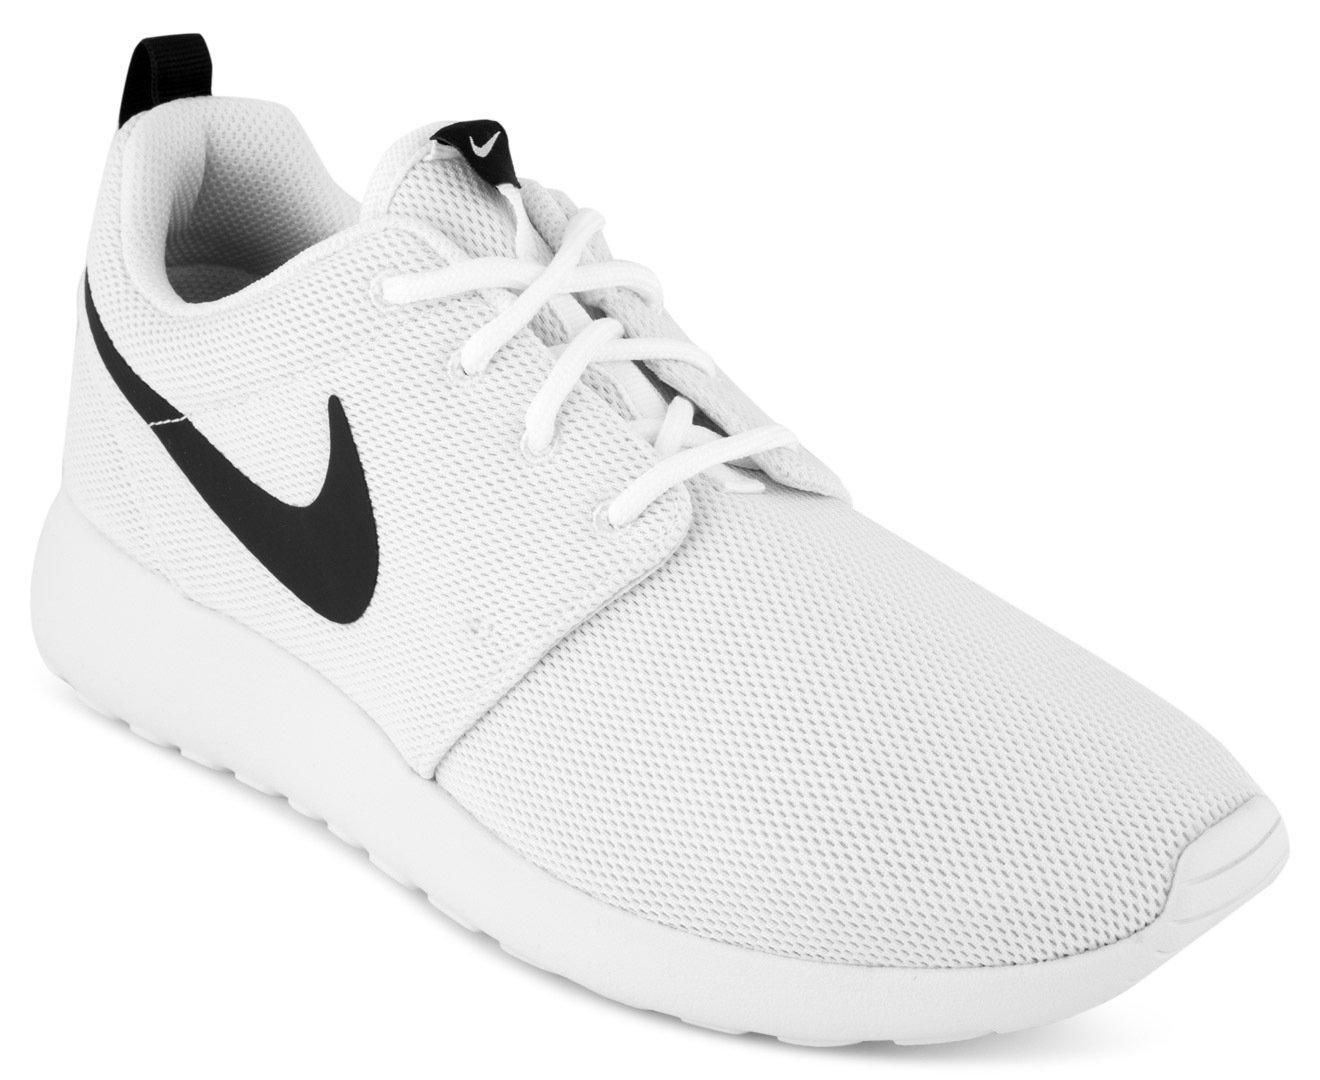 Nike Women's One Shoe White/Black | Catch.com.au